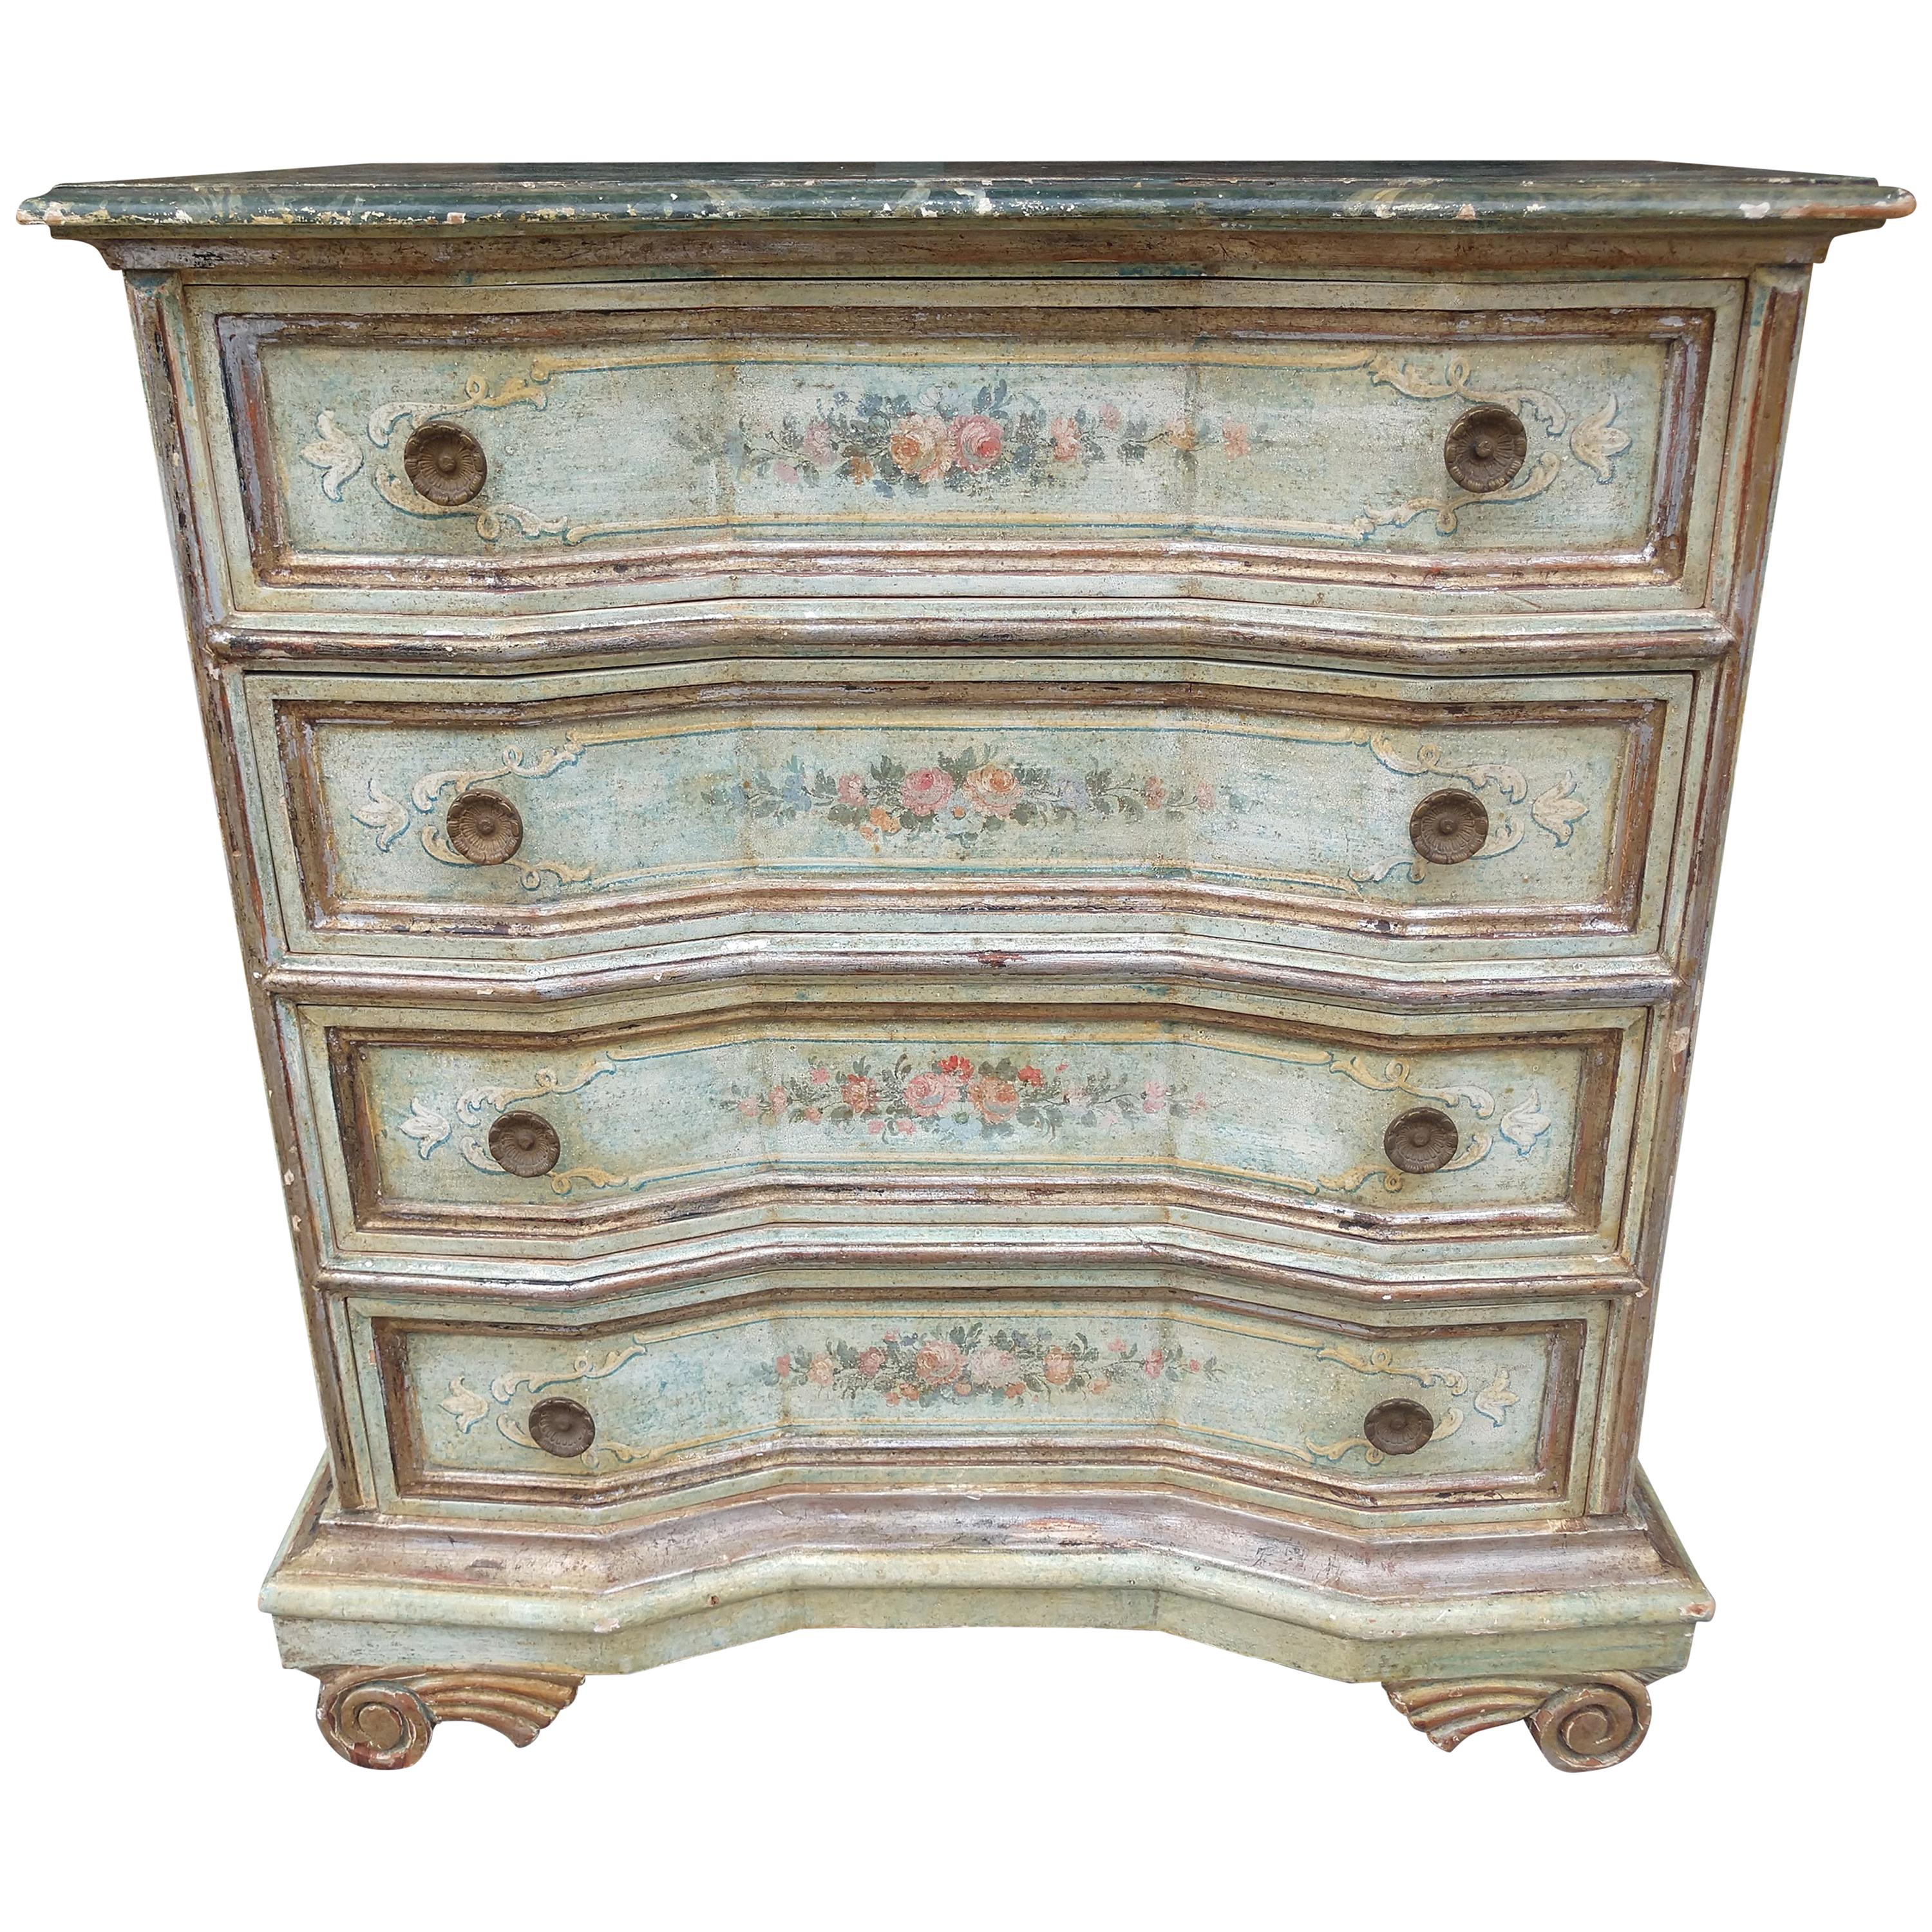 Renaissance Revival Mid Century Painted Venetian Diminutive Dresser with Marbled Top